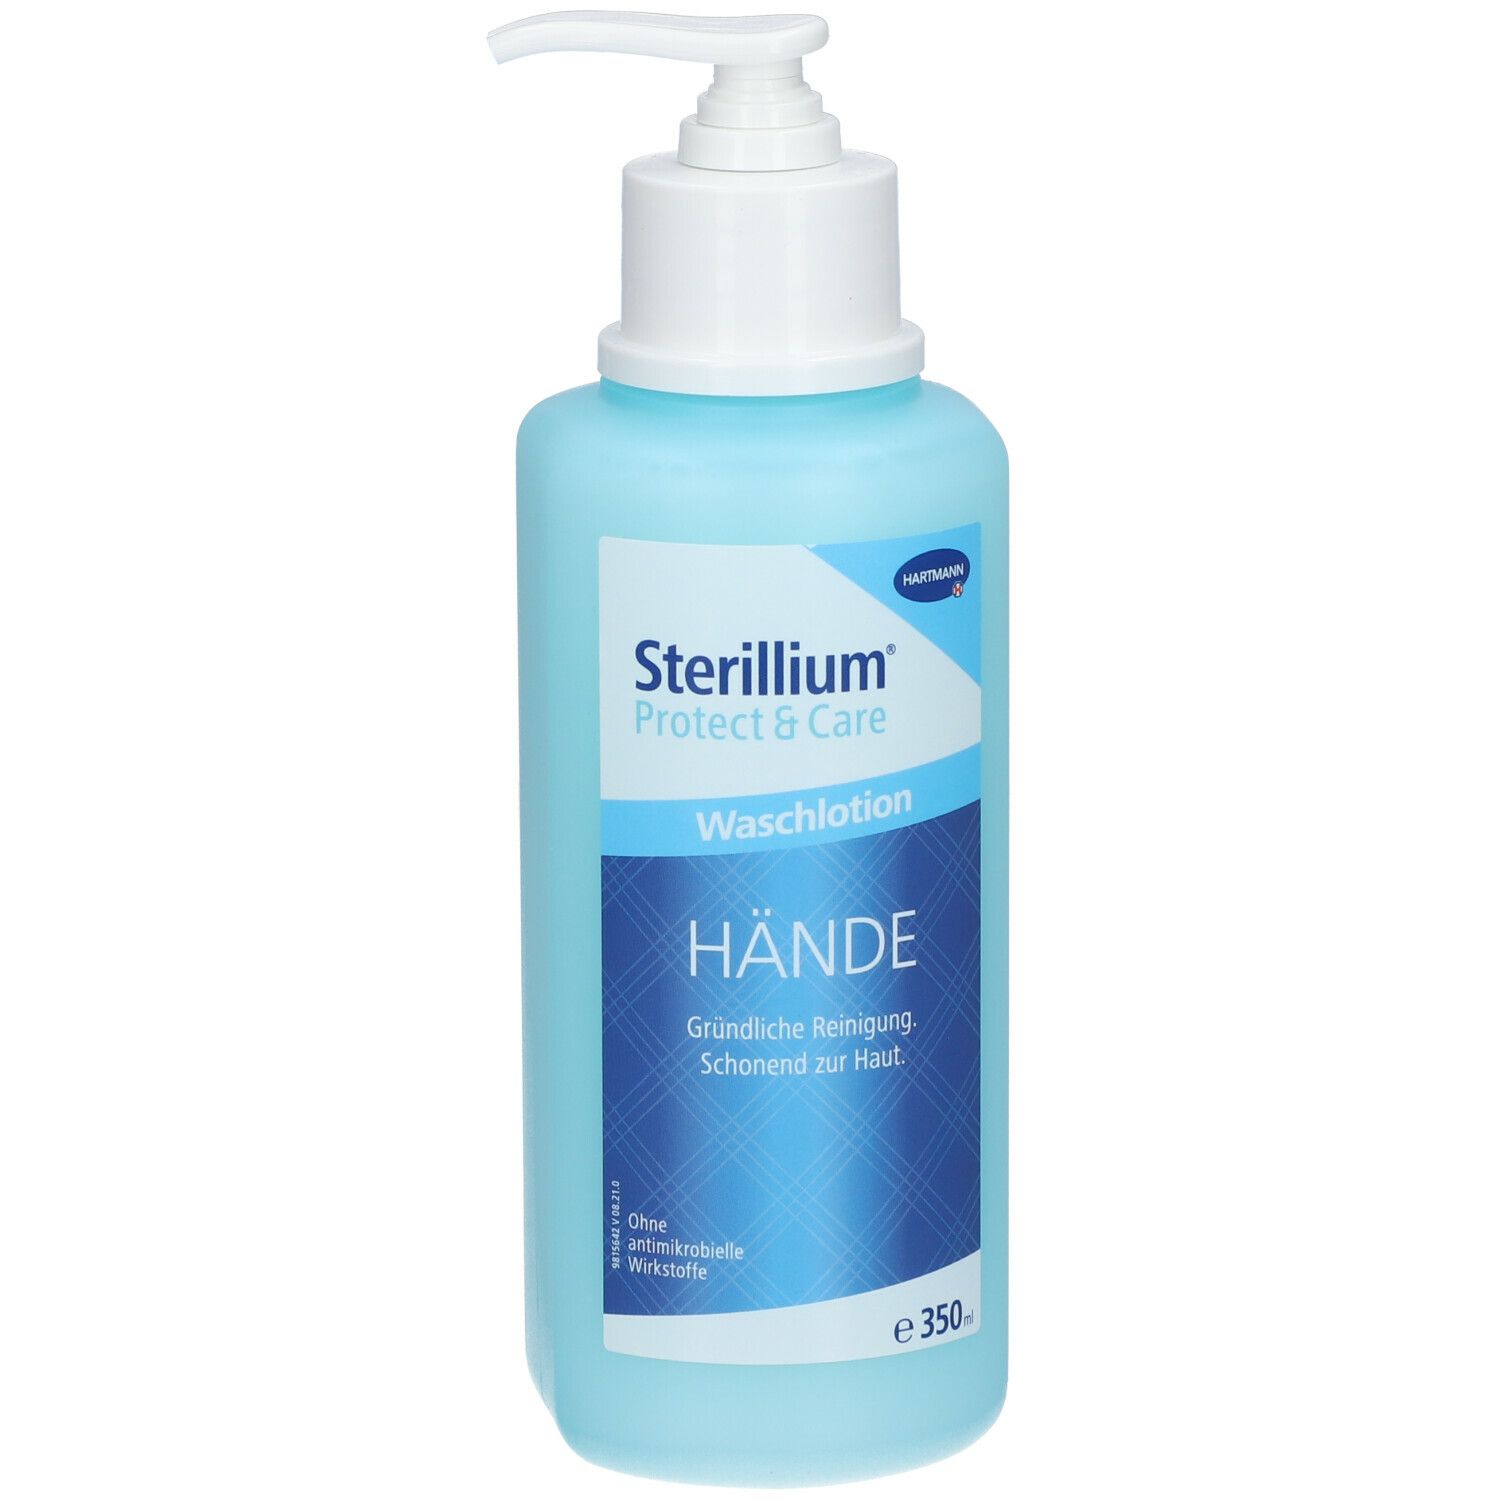 Sterillium® Protect & Care Savon liquide pour les mains